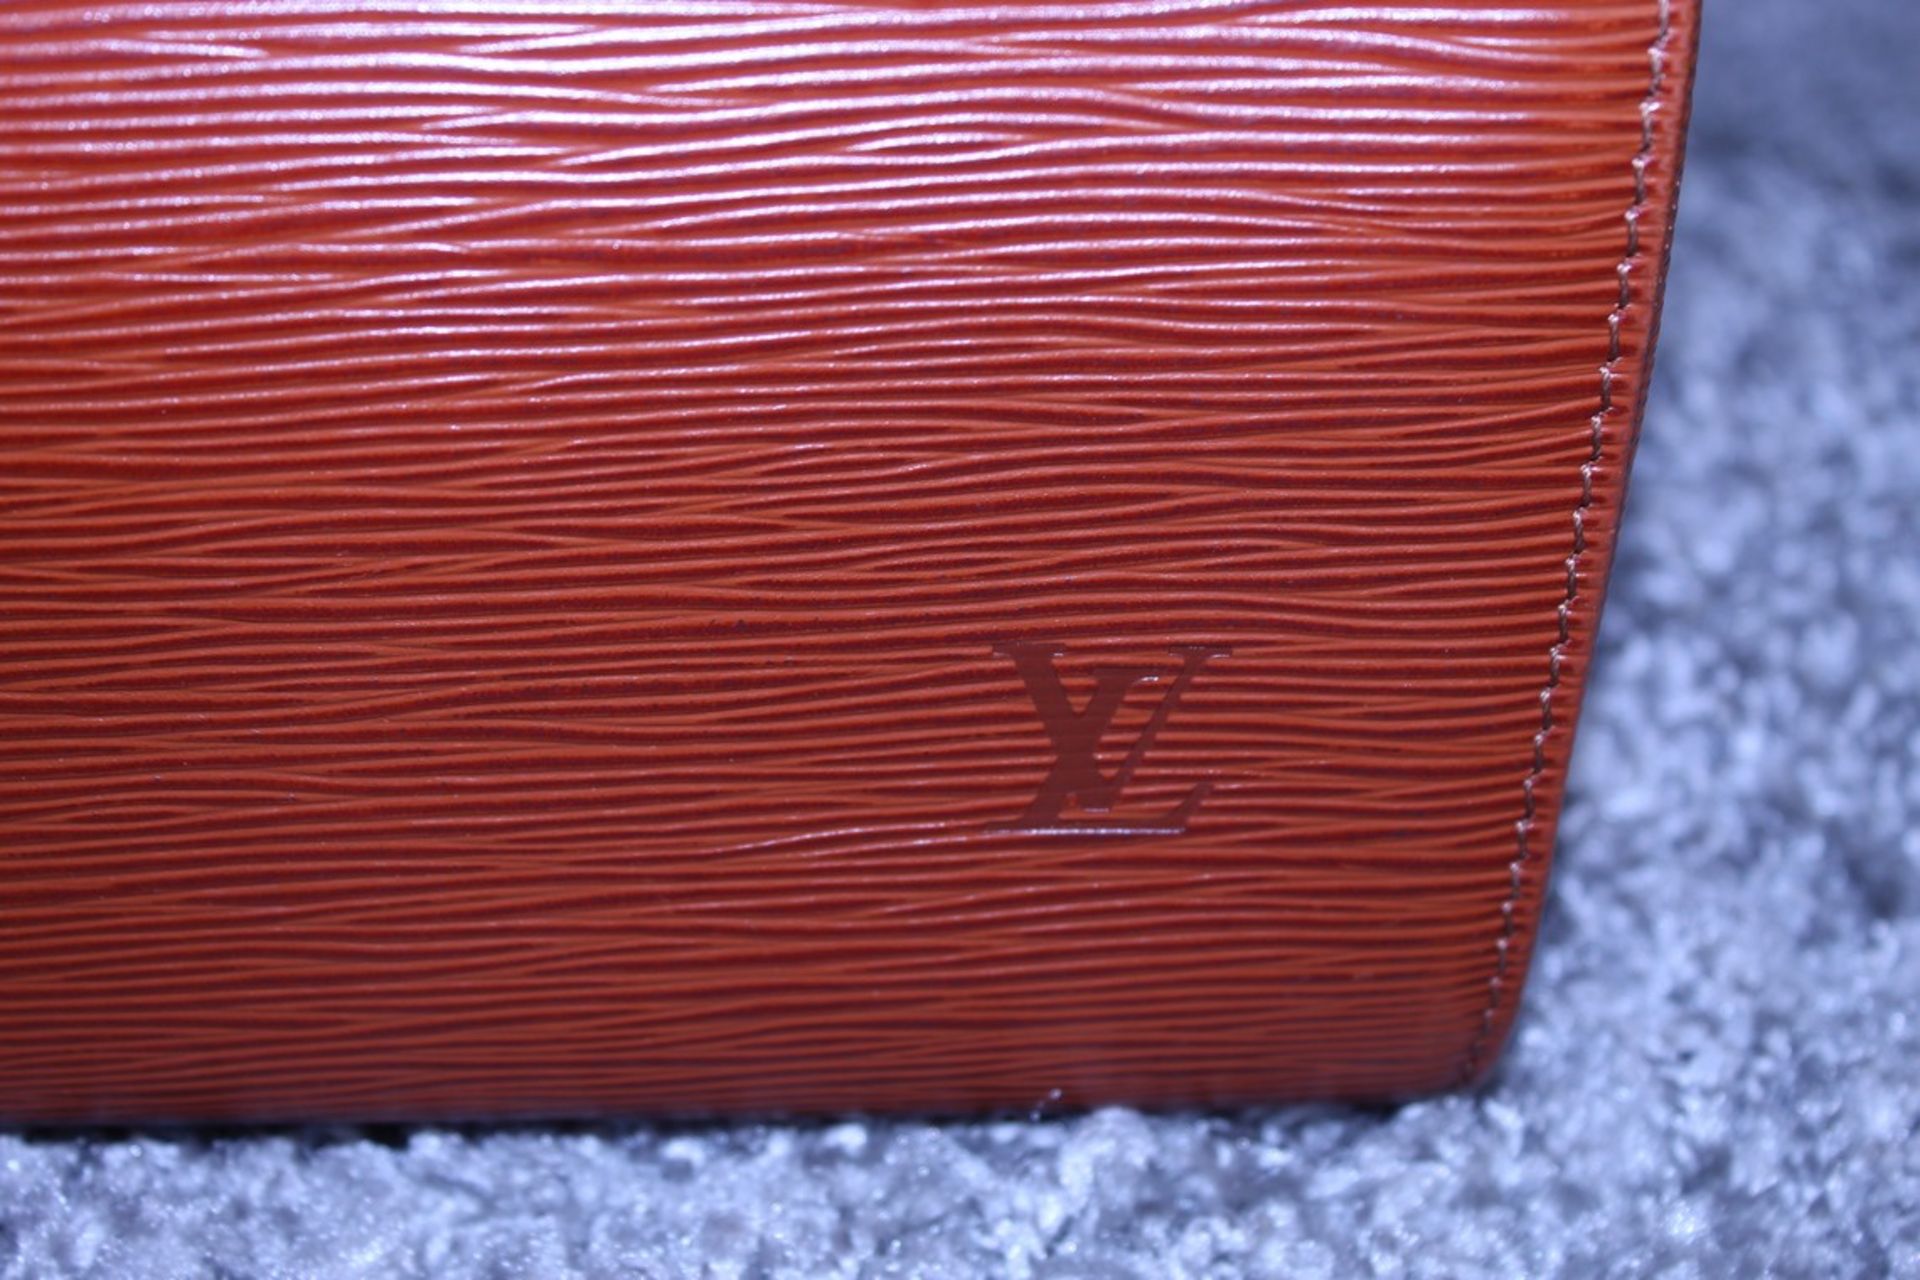 RRP £1,000 Louis Vuitton Speedy 25 Handbag, Tan Epi Calf Leather 27X19X15Cm (Production Code Vi1922) - Image 4 of 4